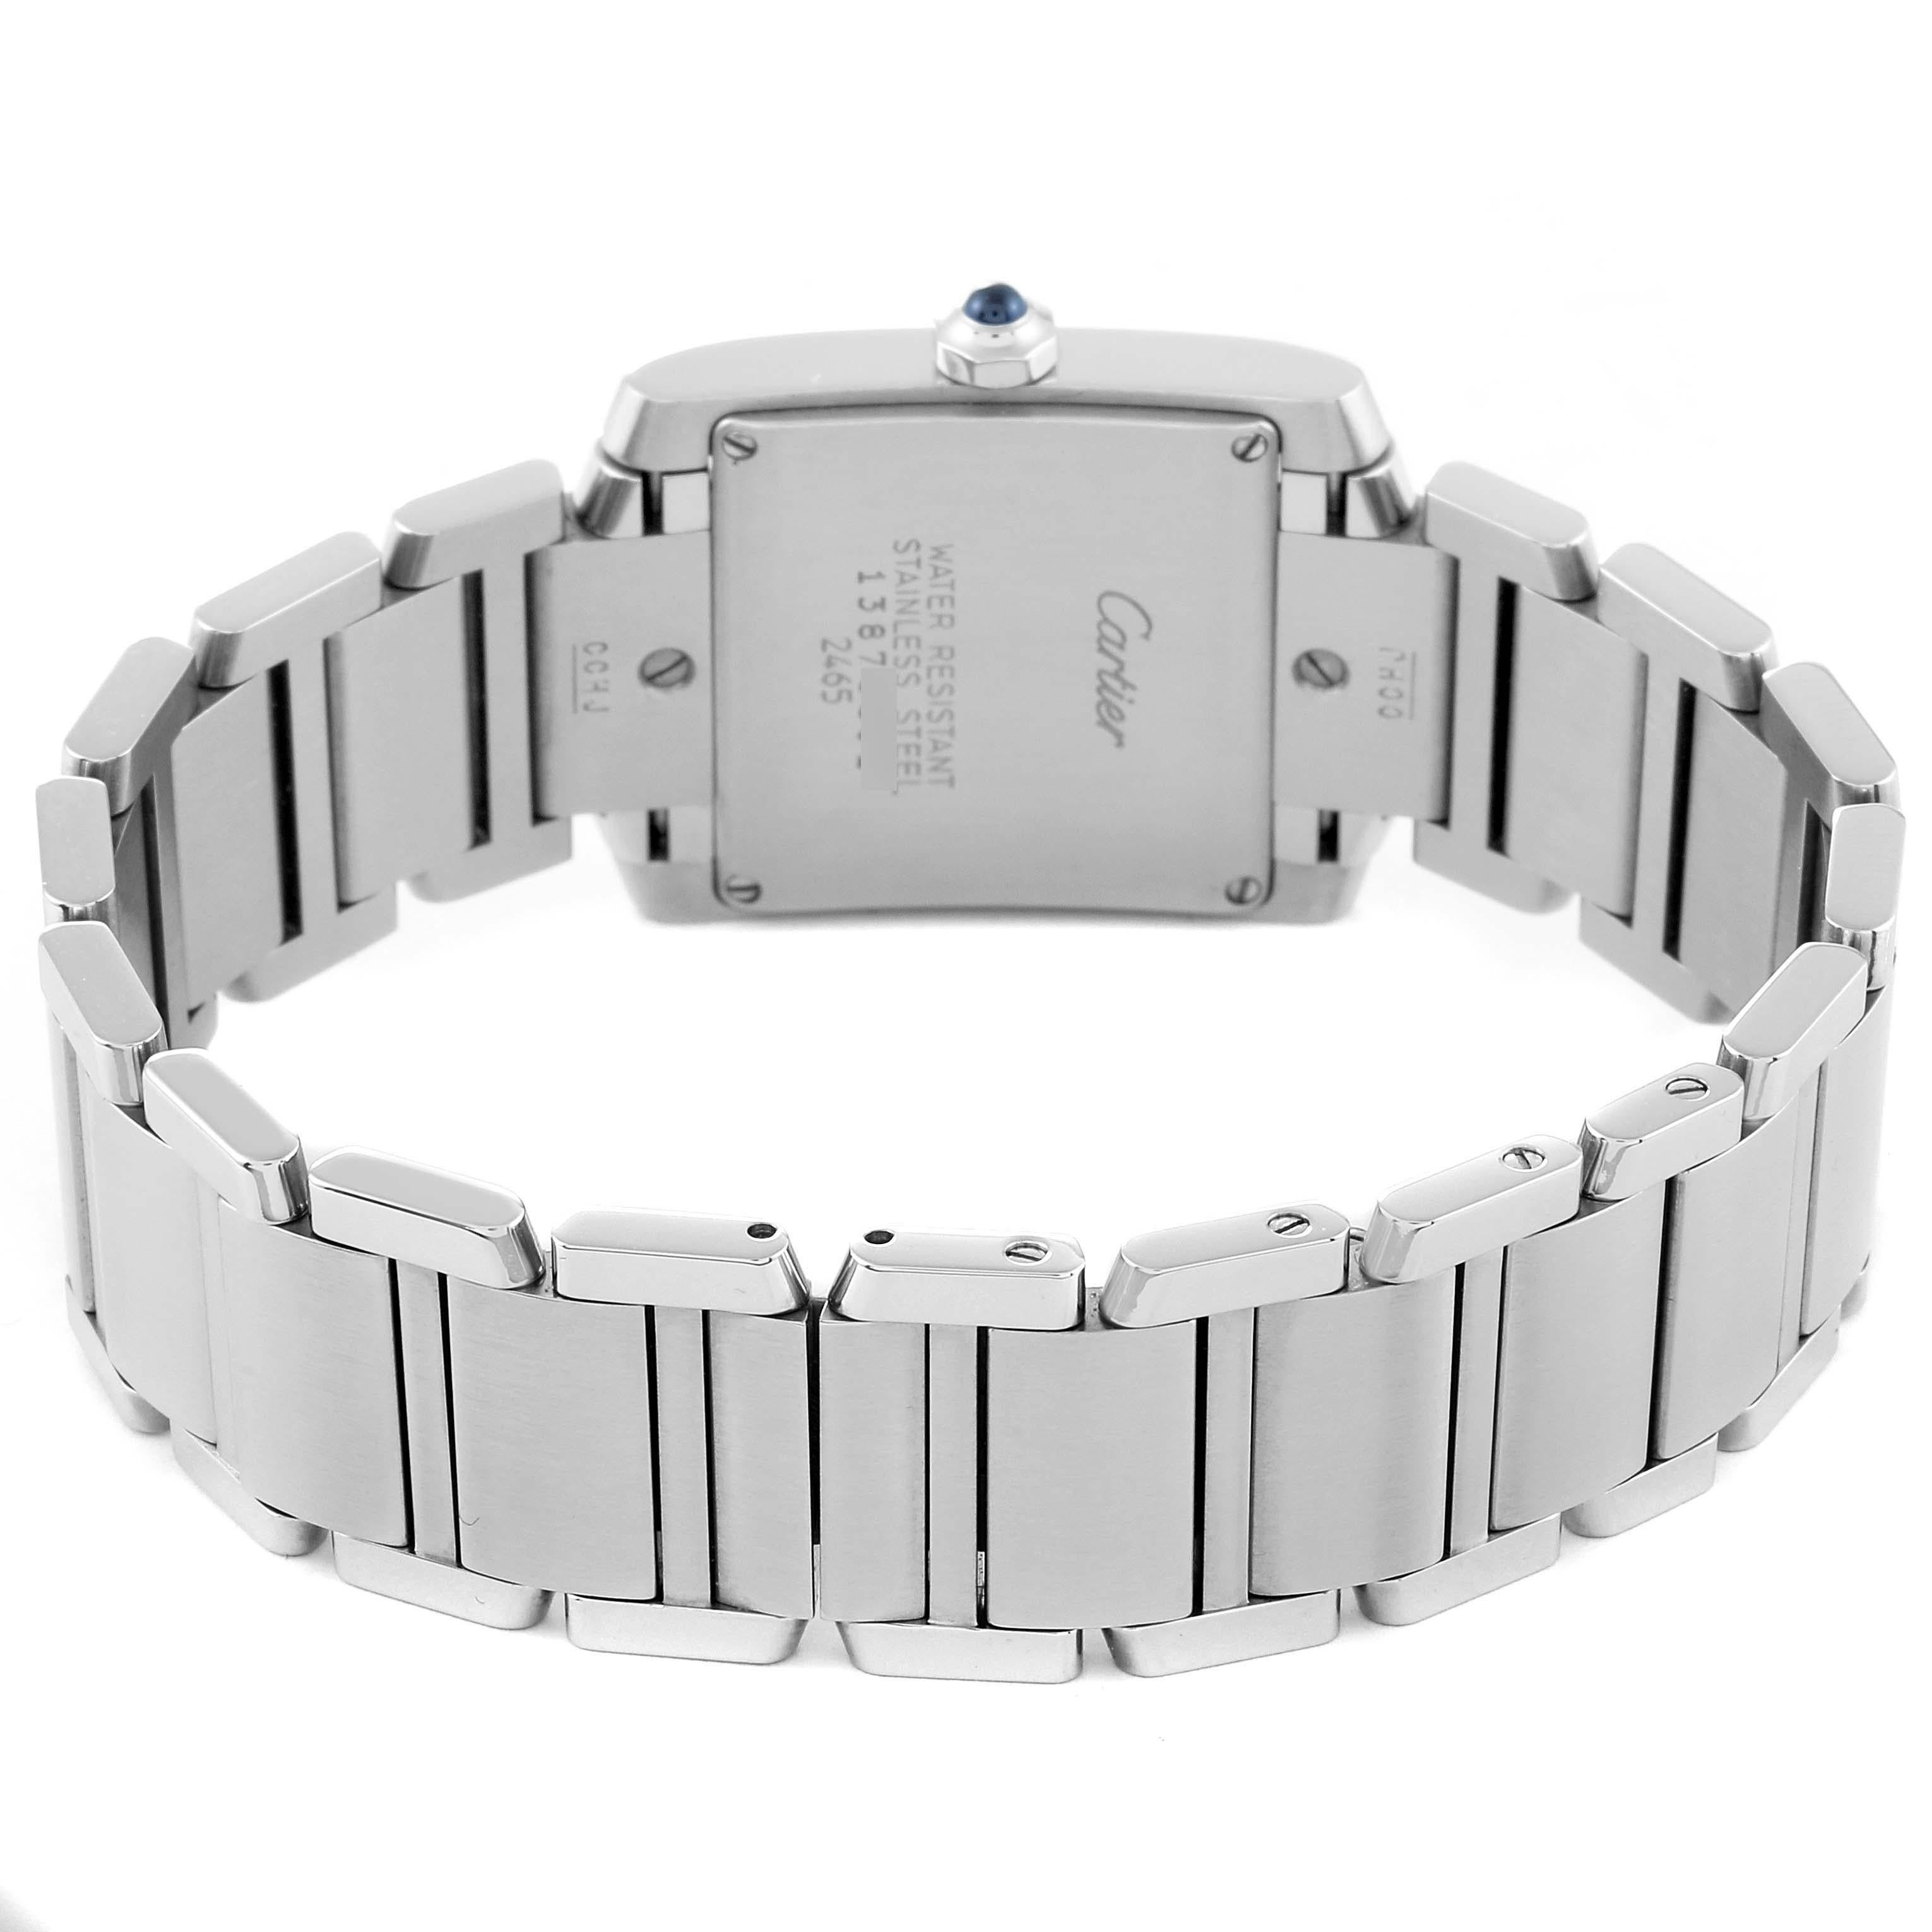 Cartier Tank Francaise Midsize Silver Dial Steel Ladies Watch W51011Q3 3